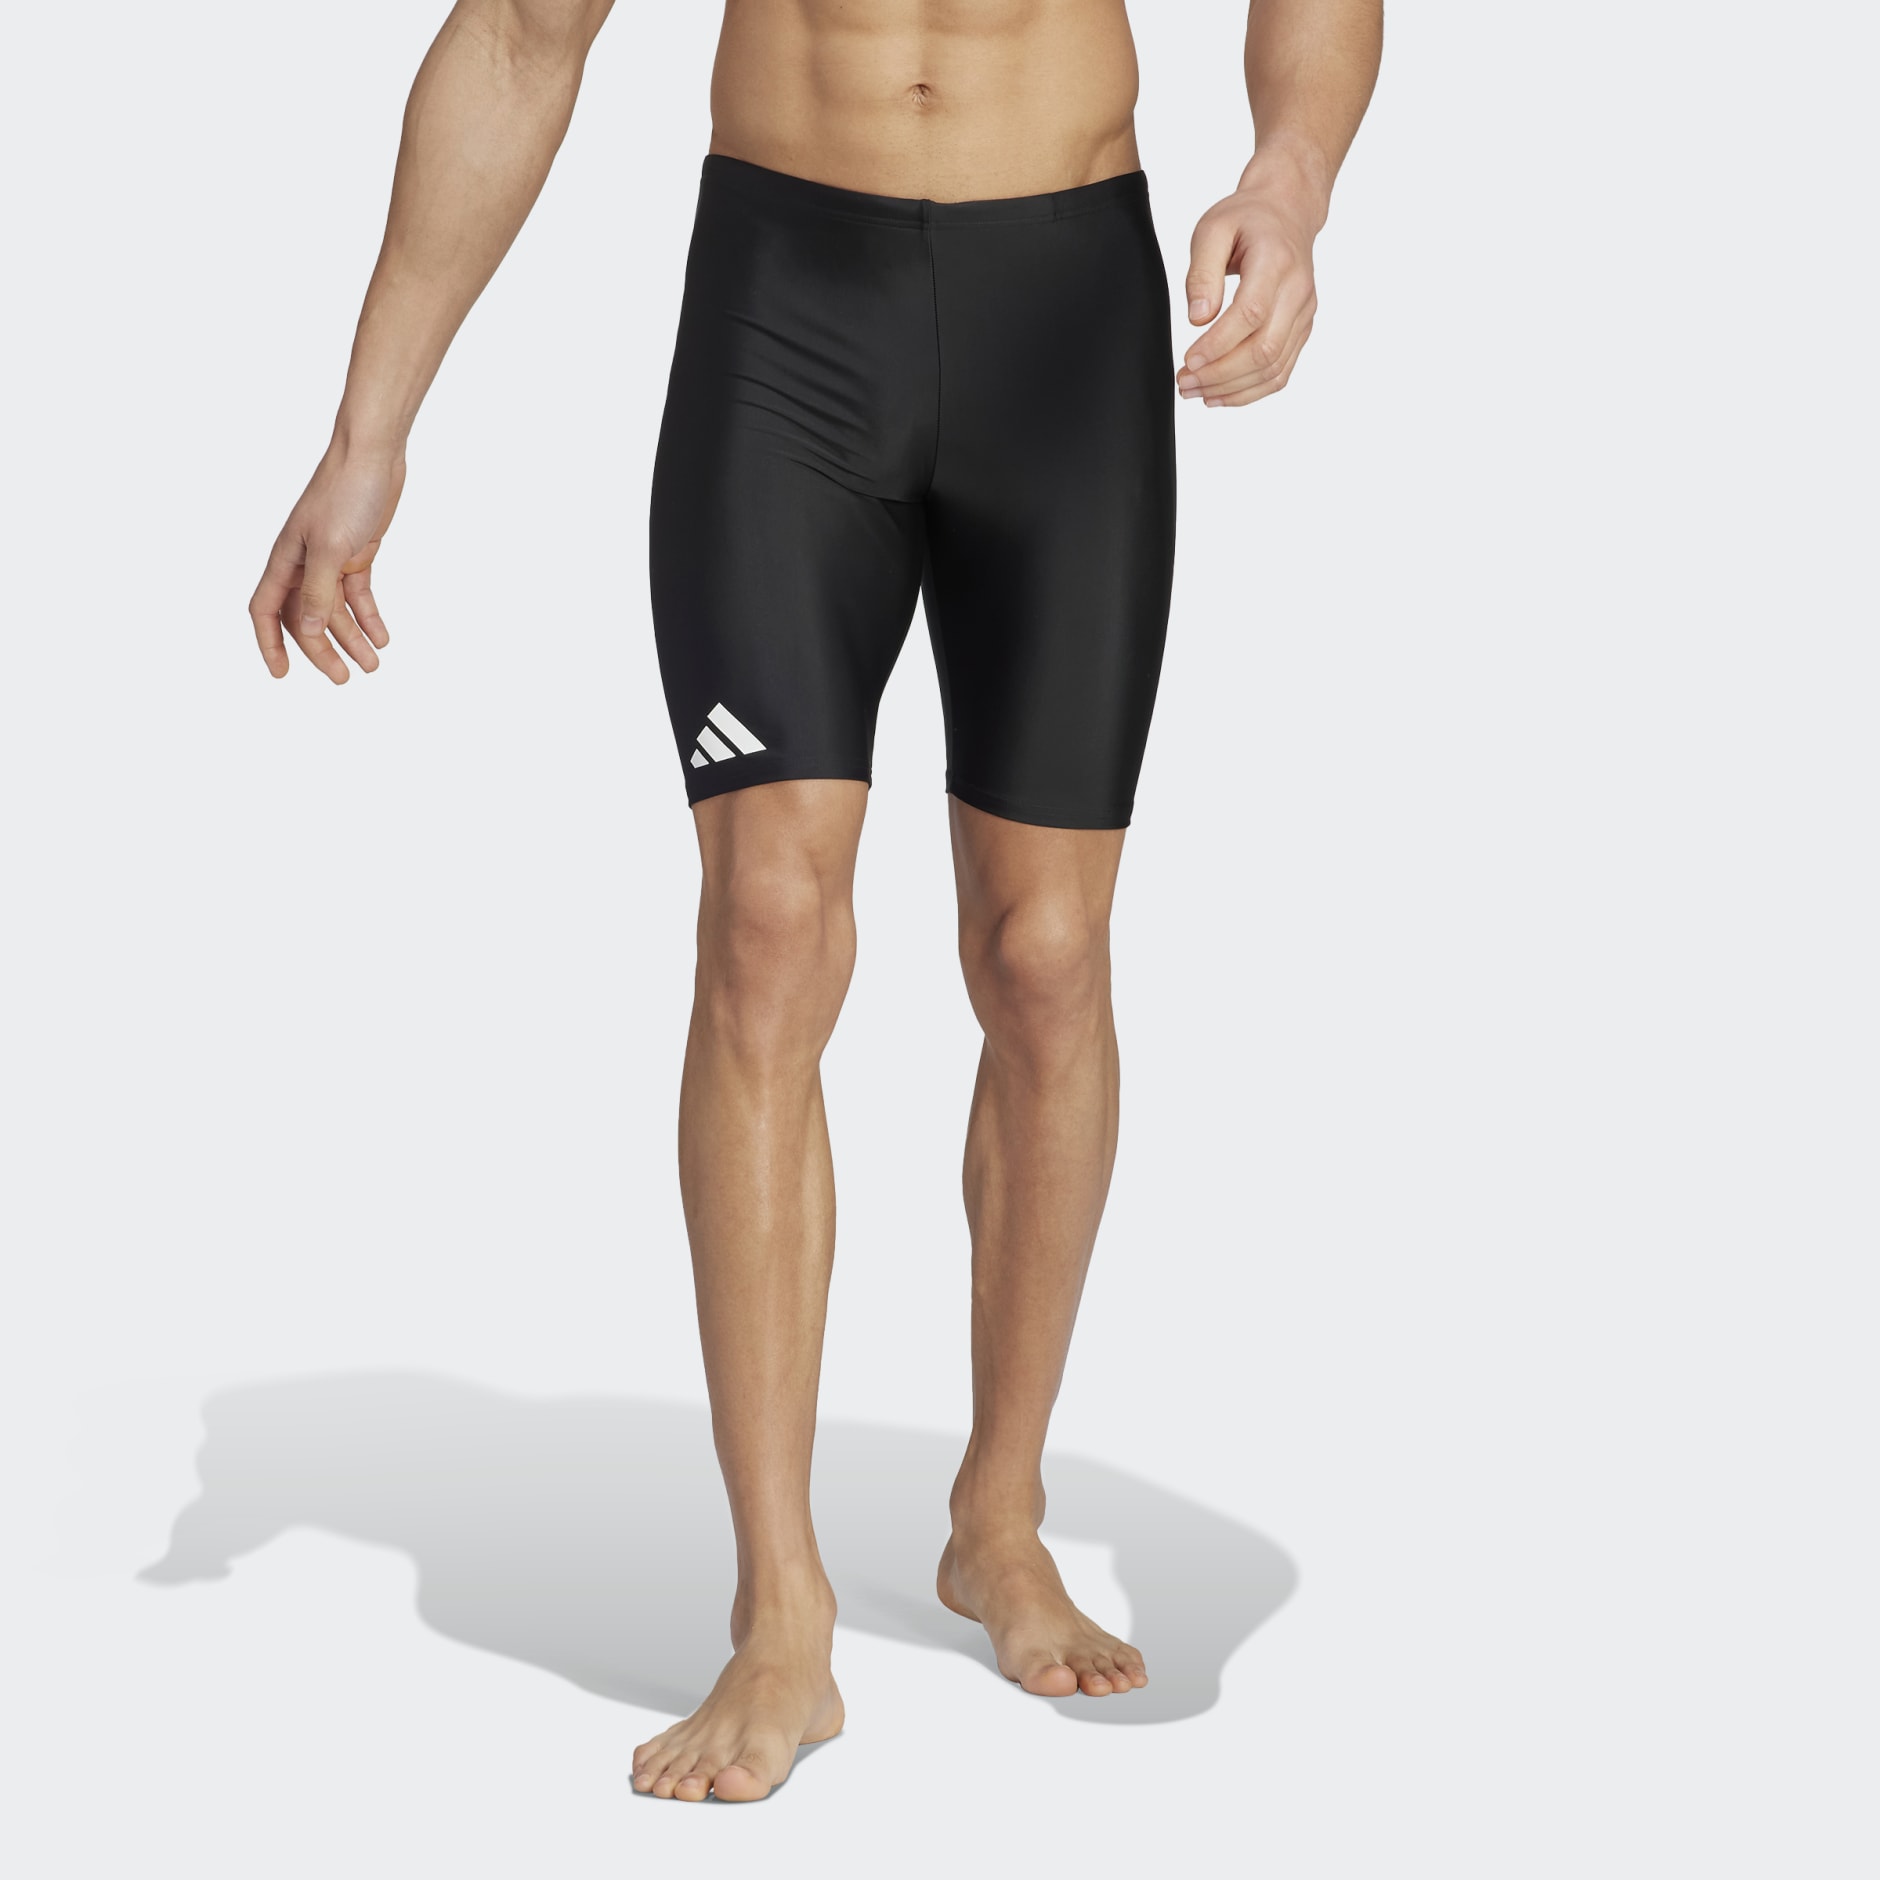 Men's Clothing - Solid Swim Jammers - Black